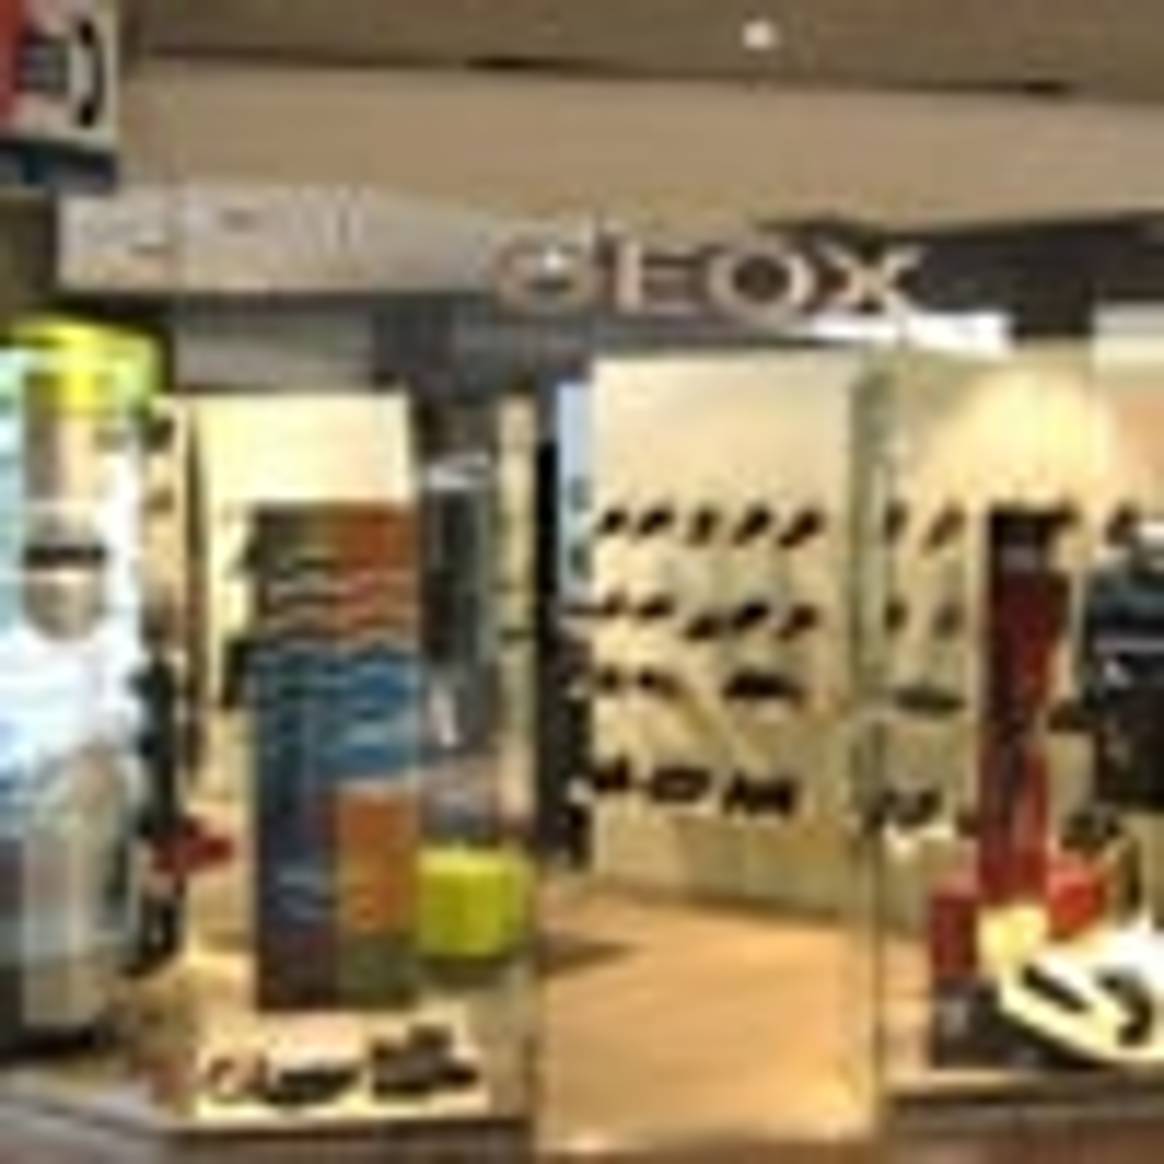 Geox incrementa sus ventas